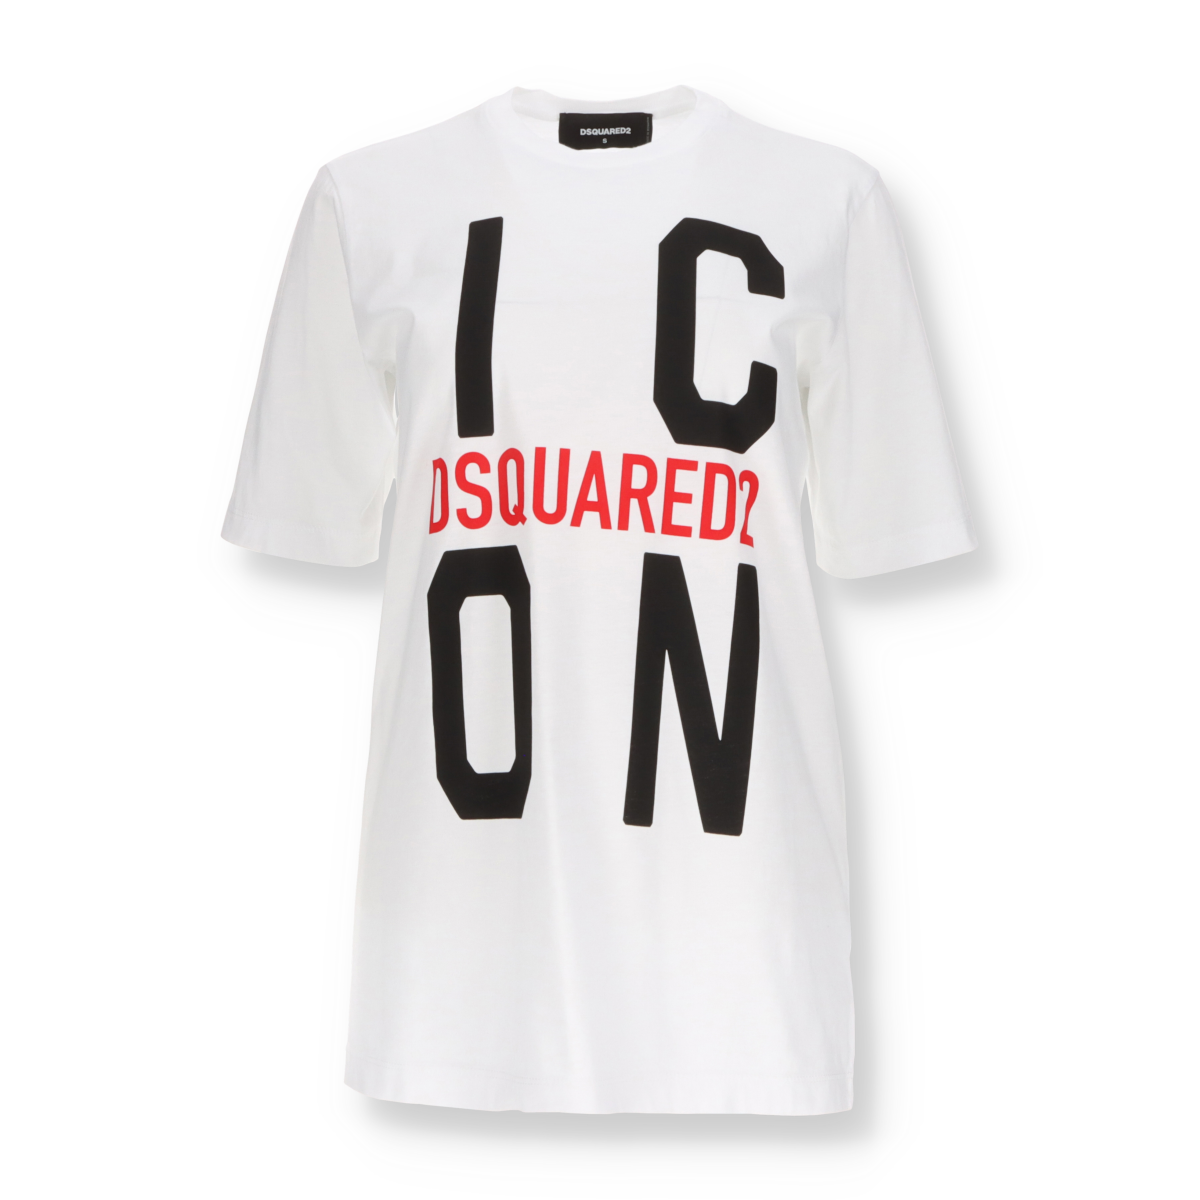 Dsquared2 Iconic T-Shirt